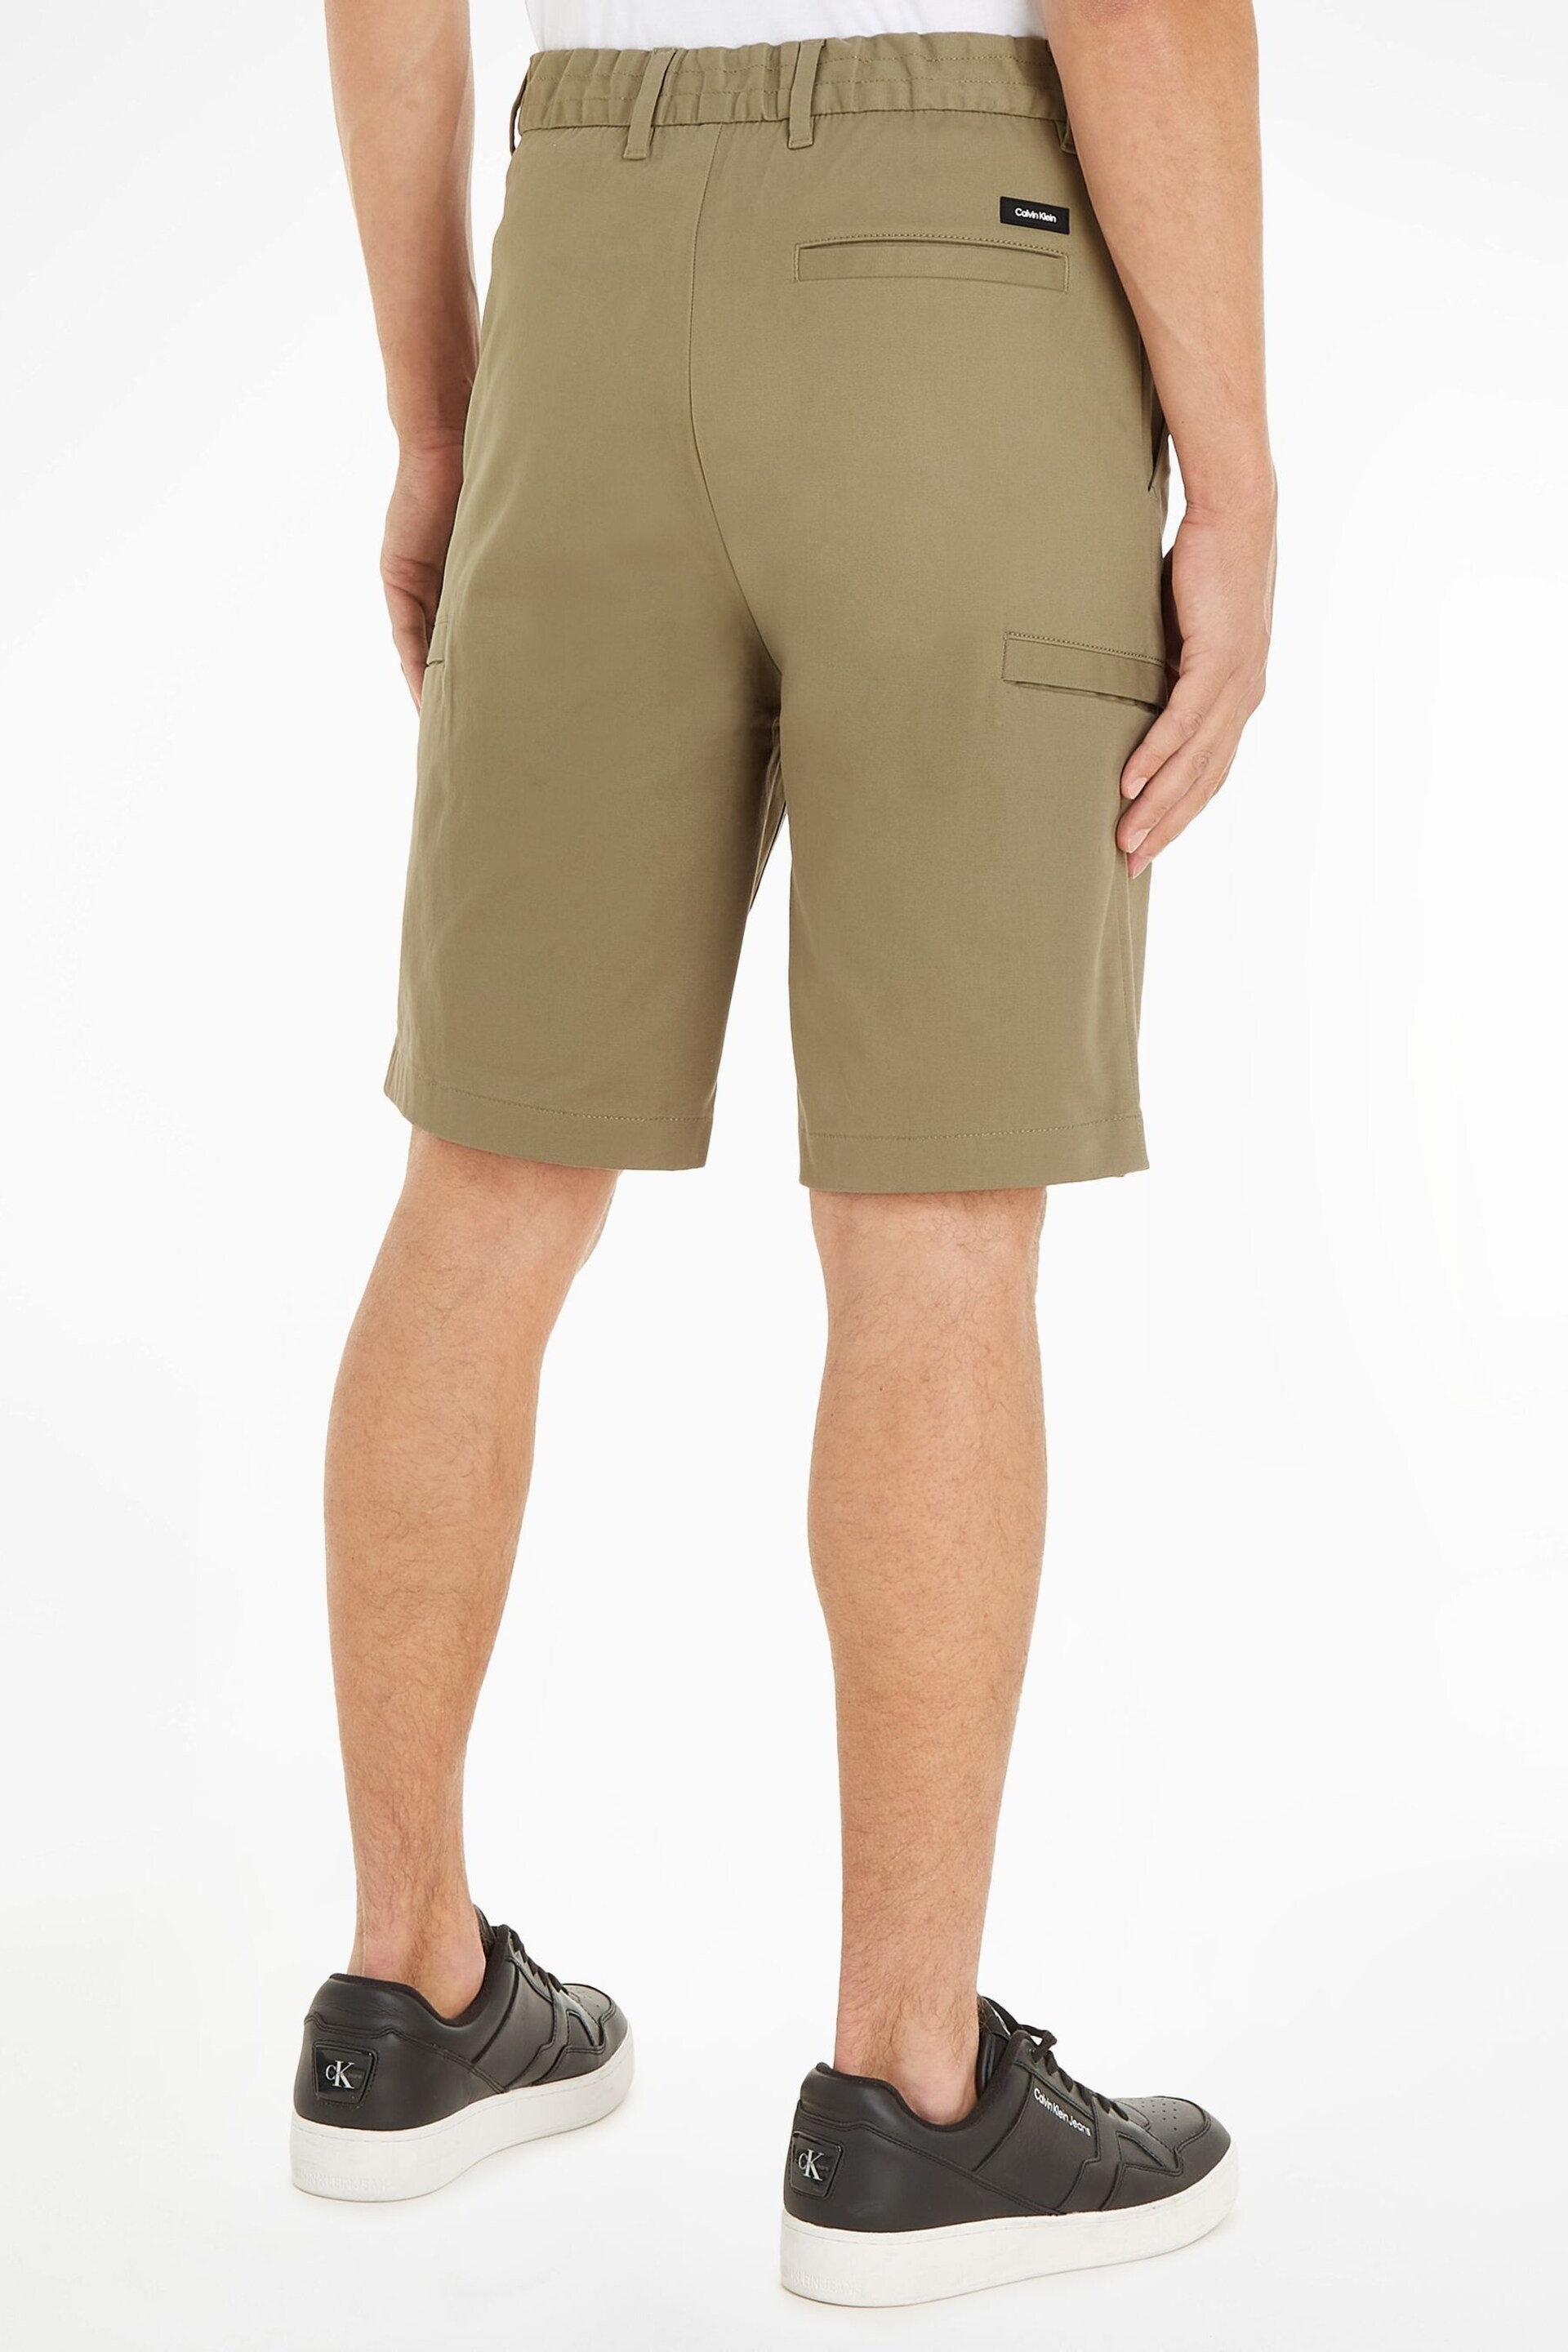 Calvin Klein Green Modern Twill Cargo Shorts - Image 2 of 5